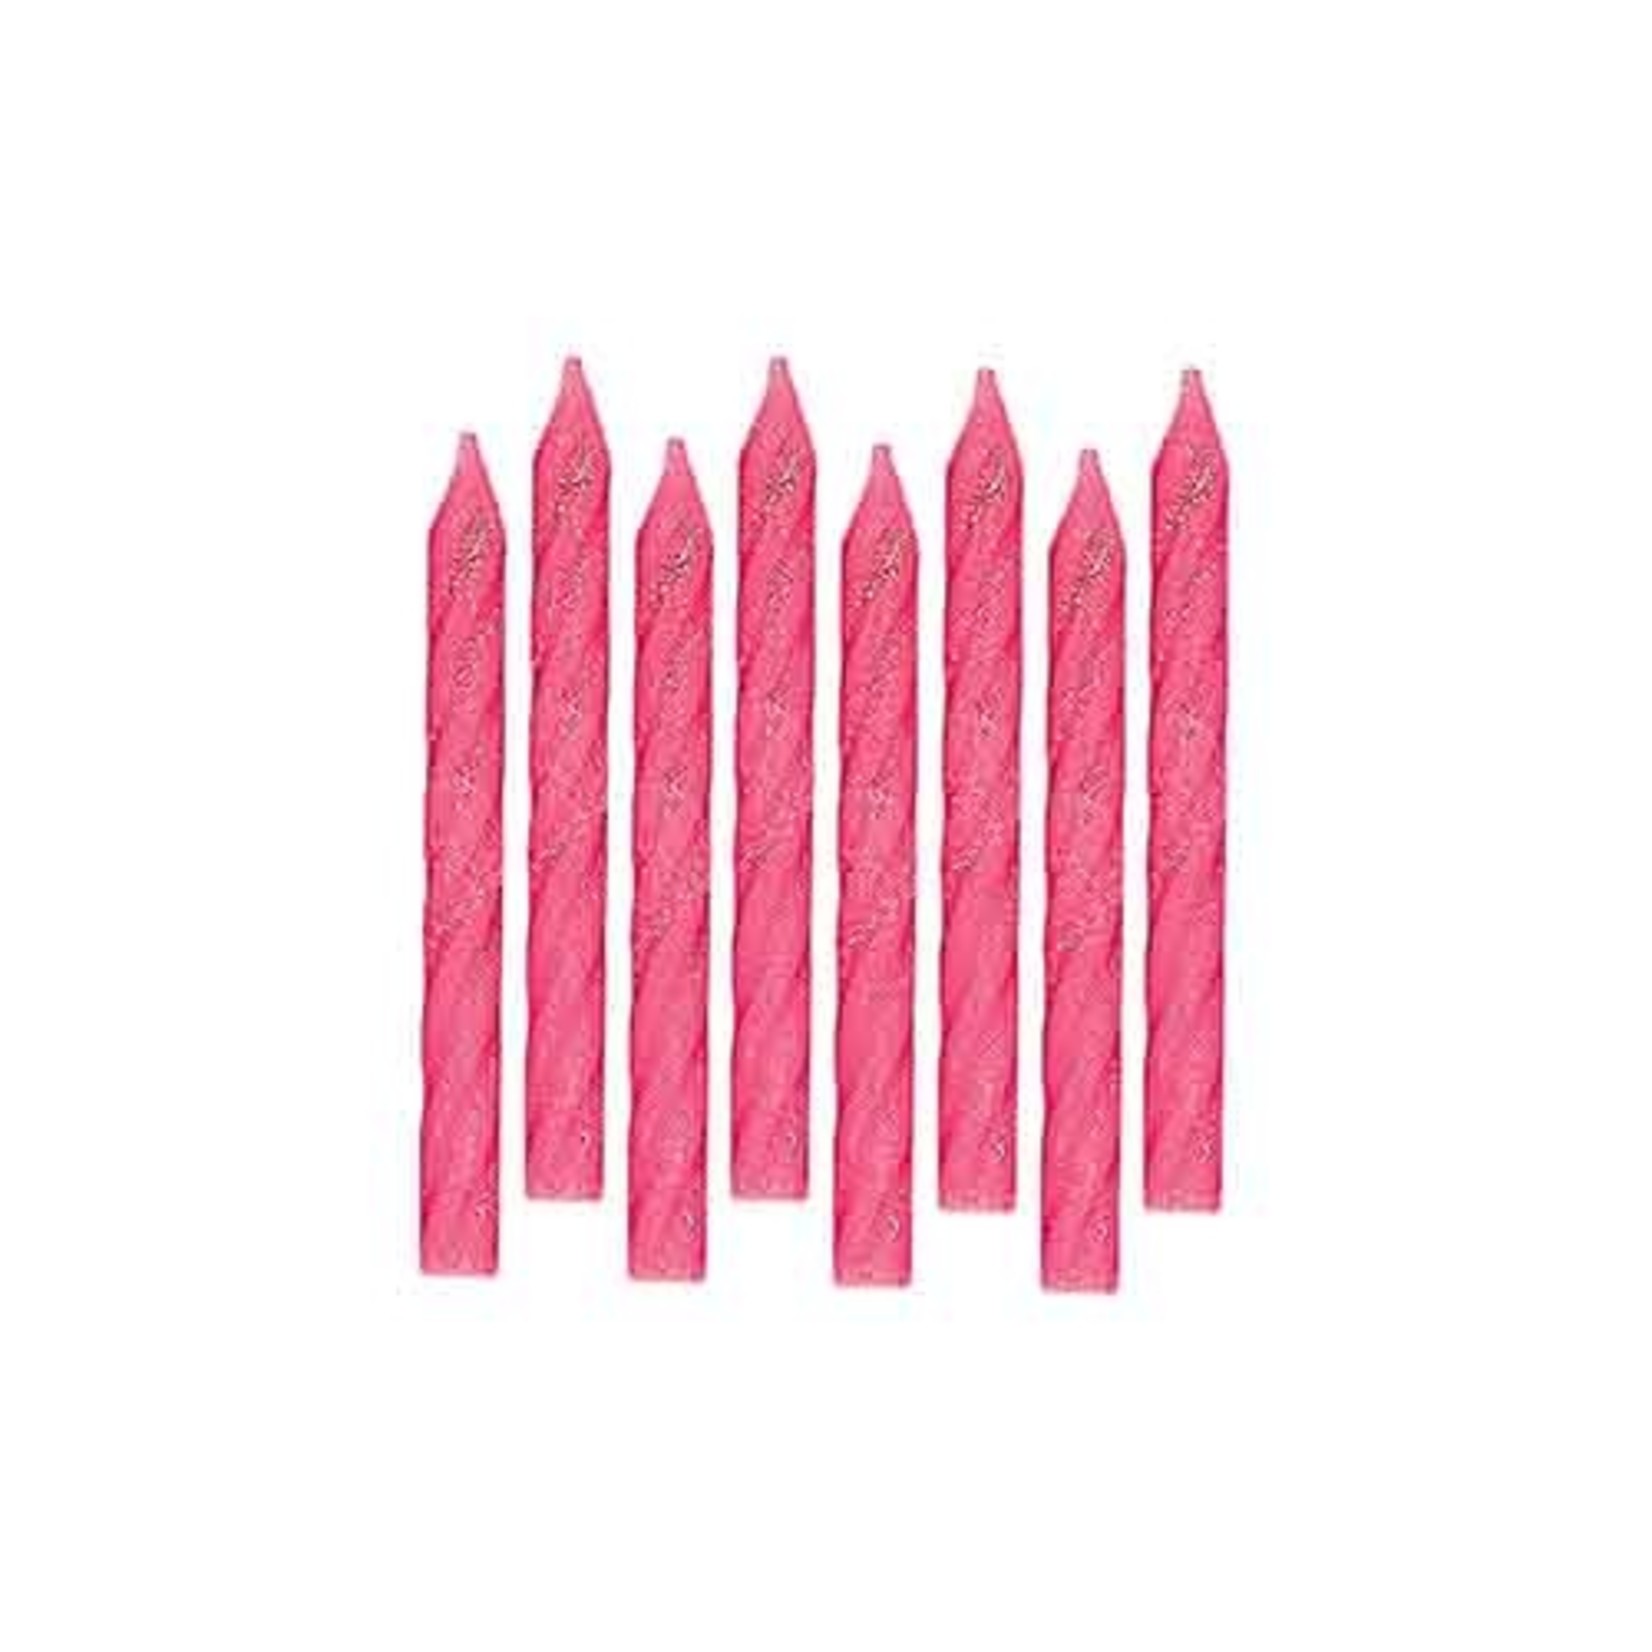 Amscan Pink Glitter Spiral Birthday Candles - 24ct.